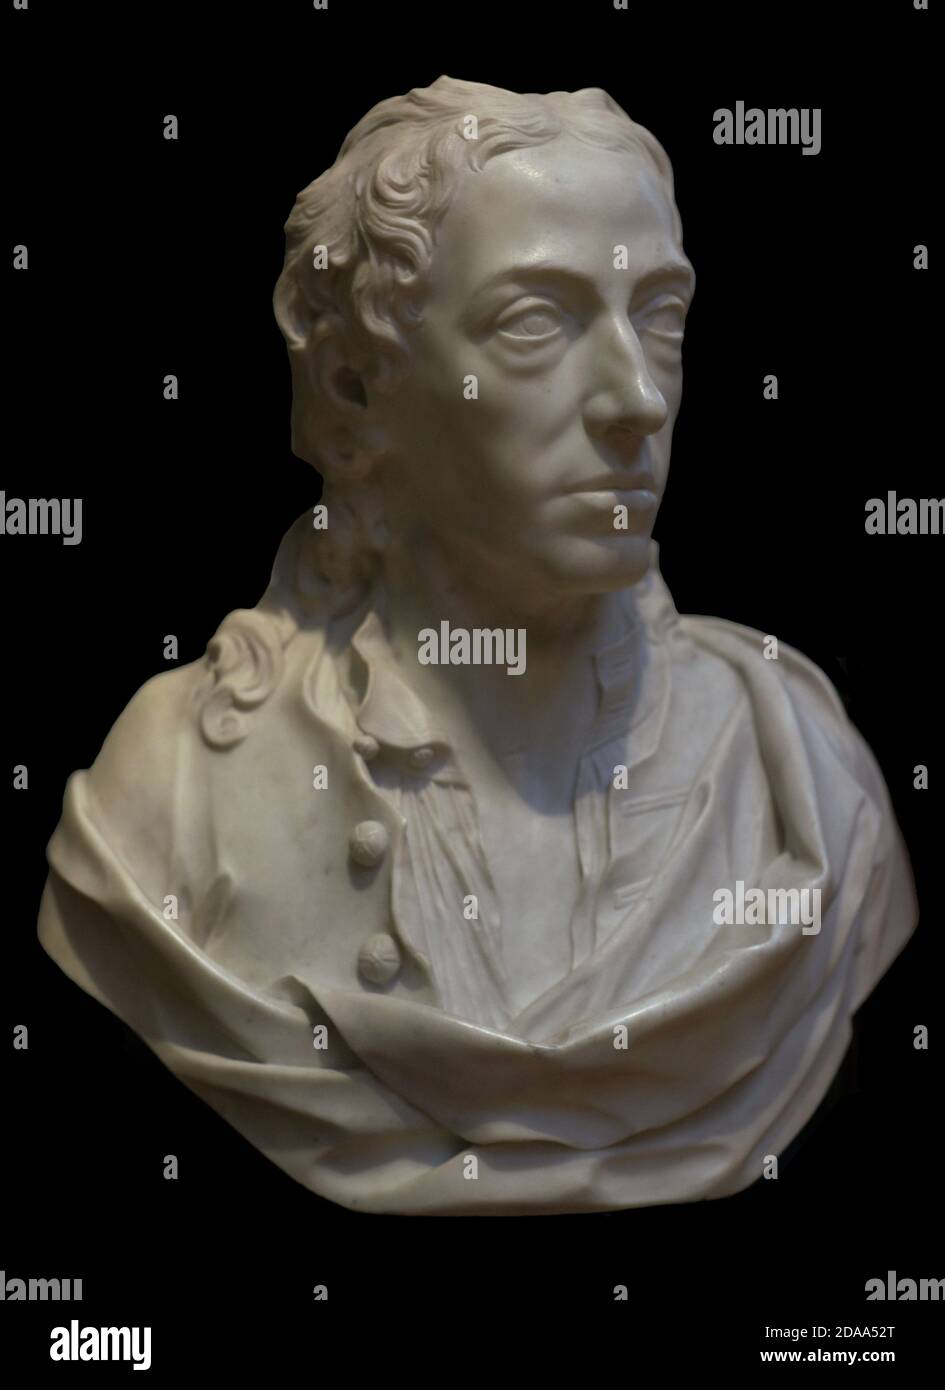 Alexander Pope (1688-1744). English satirical poet. Bust by John Michael Rysbrack (1693-1770). Marble, 1730. National Portrait Gallery. London, England, United Kingdom. Stock Photo